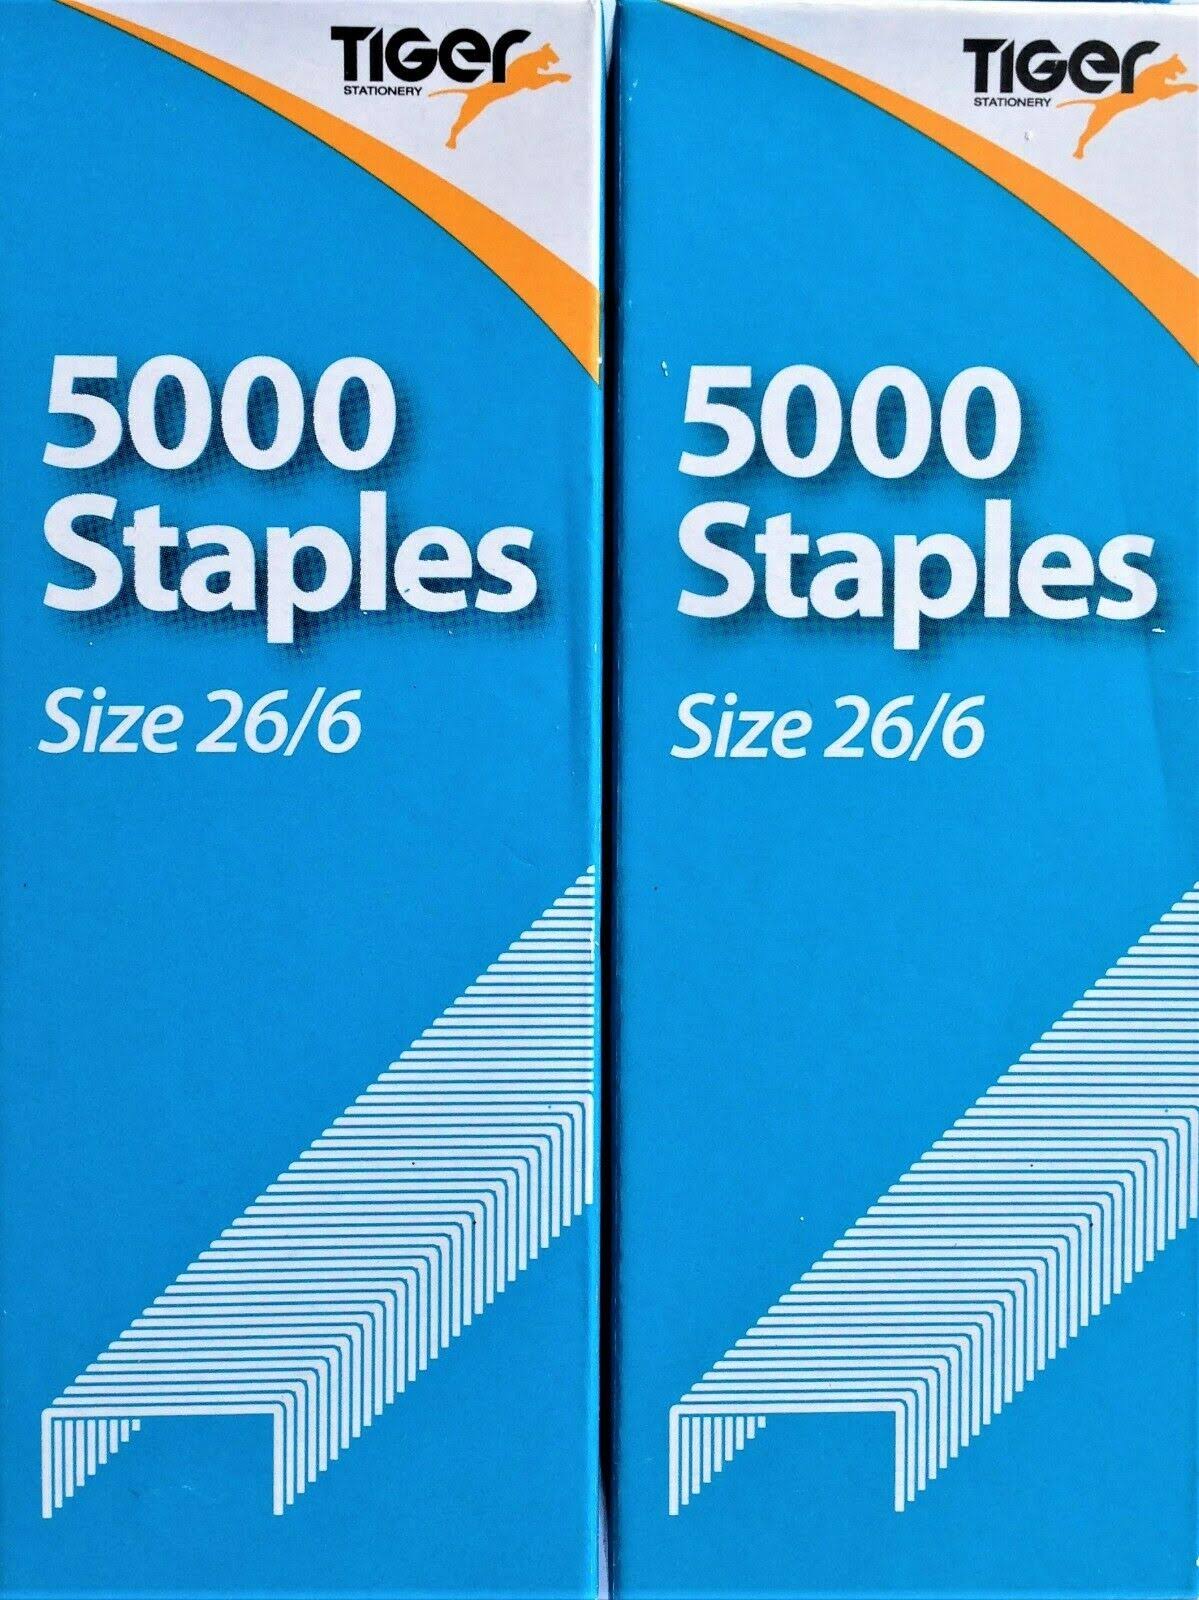 Tiger Staples - 26/8, 5000 Staples